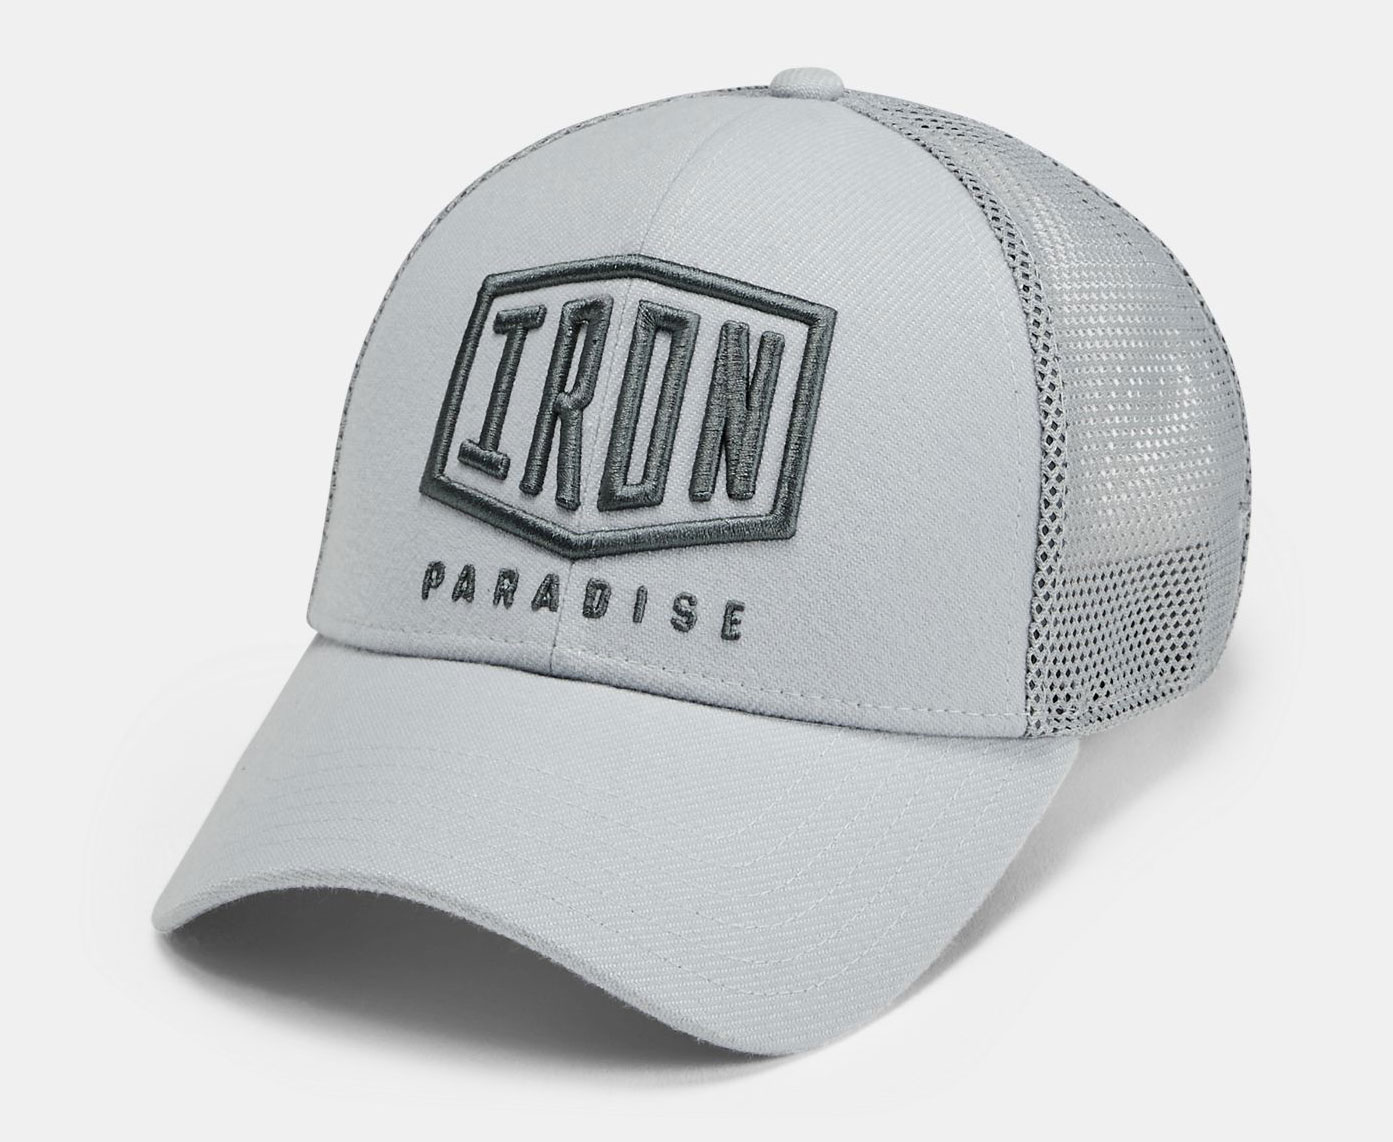 iron paradise apparel